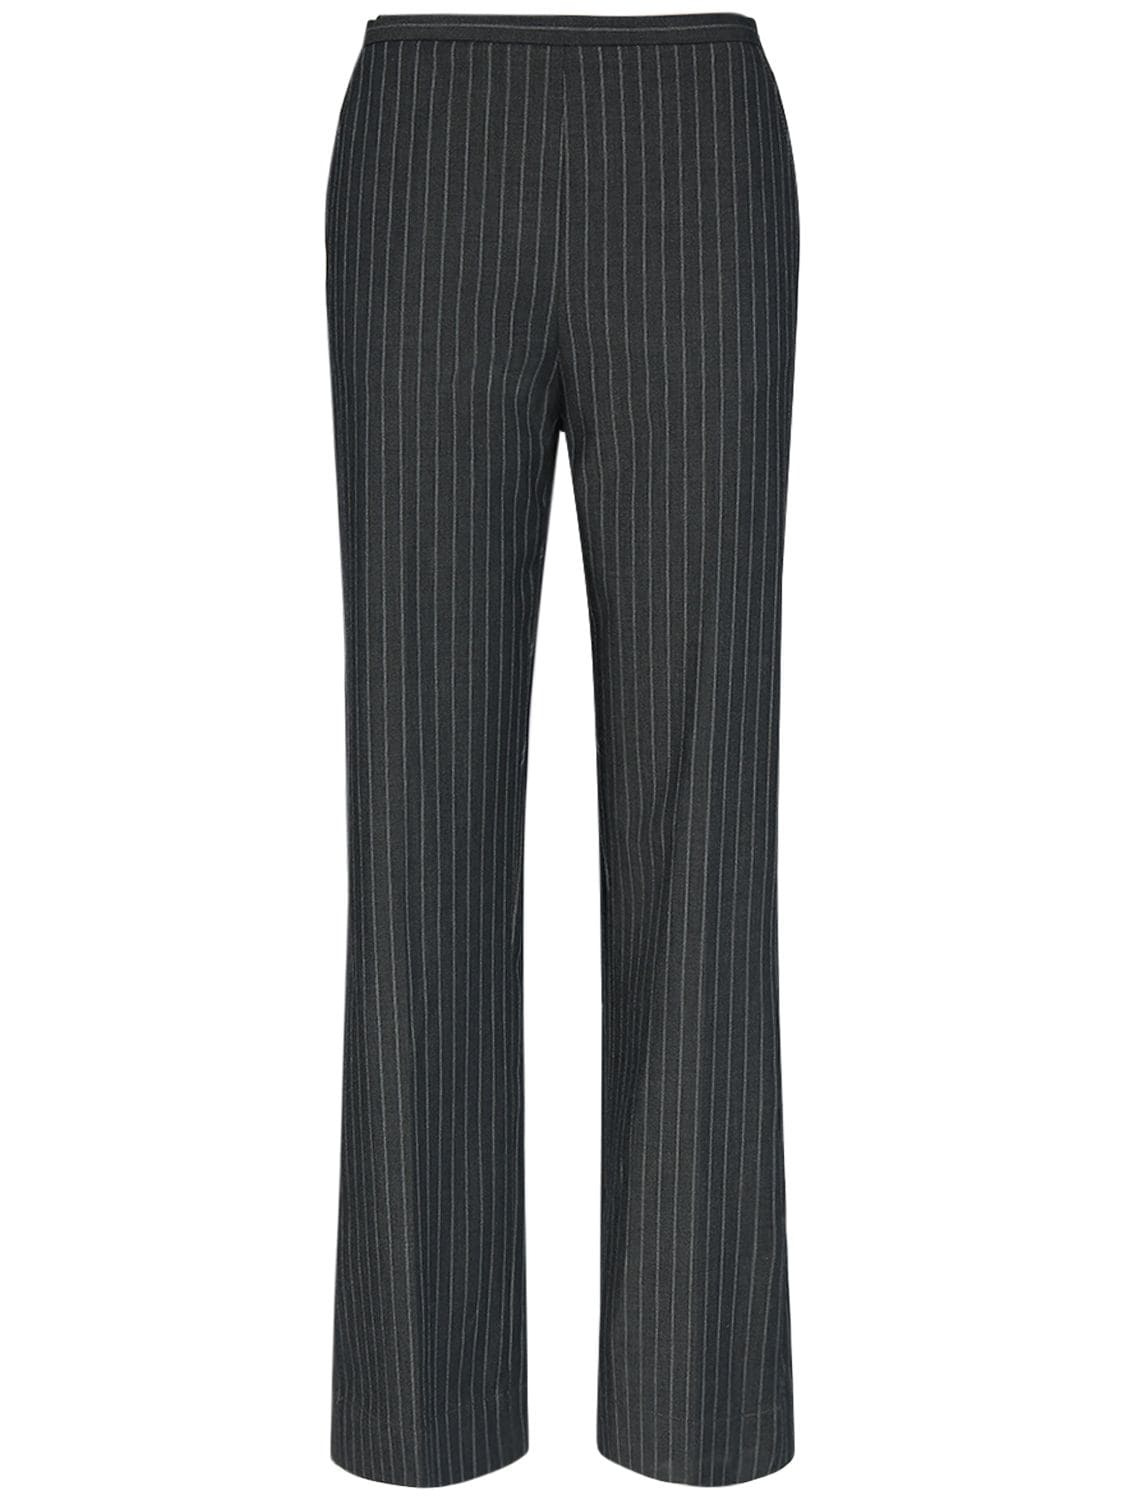 Image of Midrise Stretch Tech Pinstripe Pants